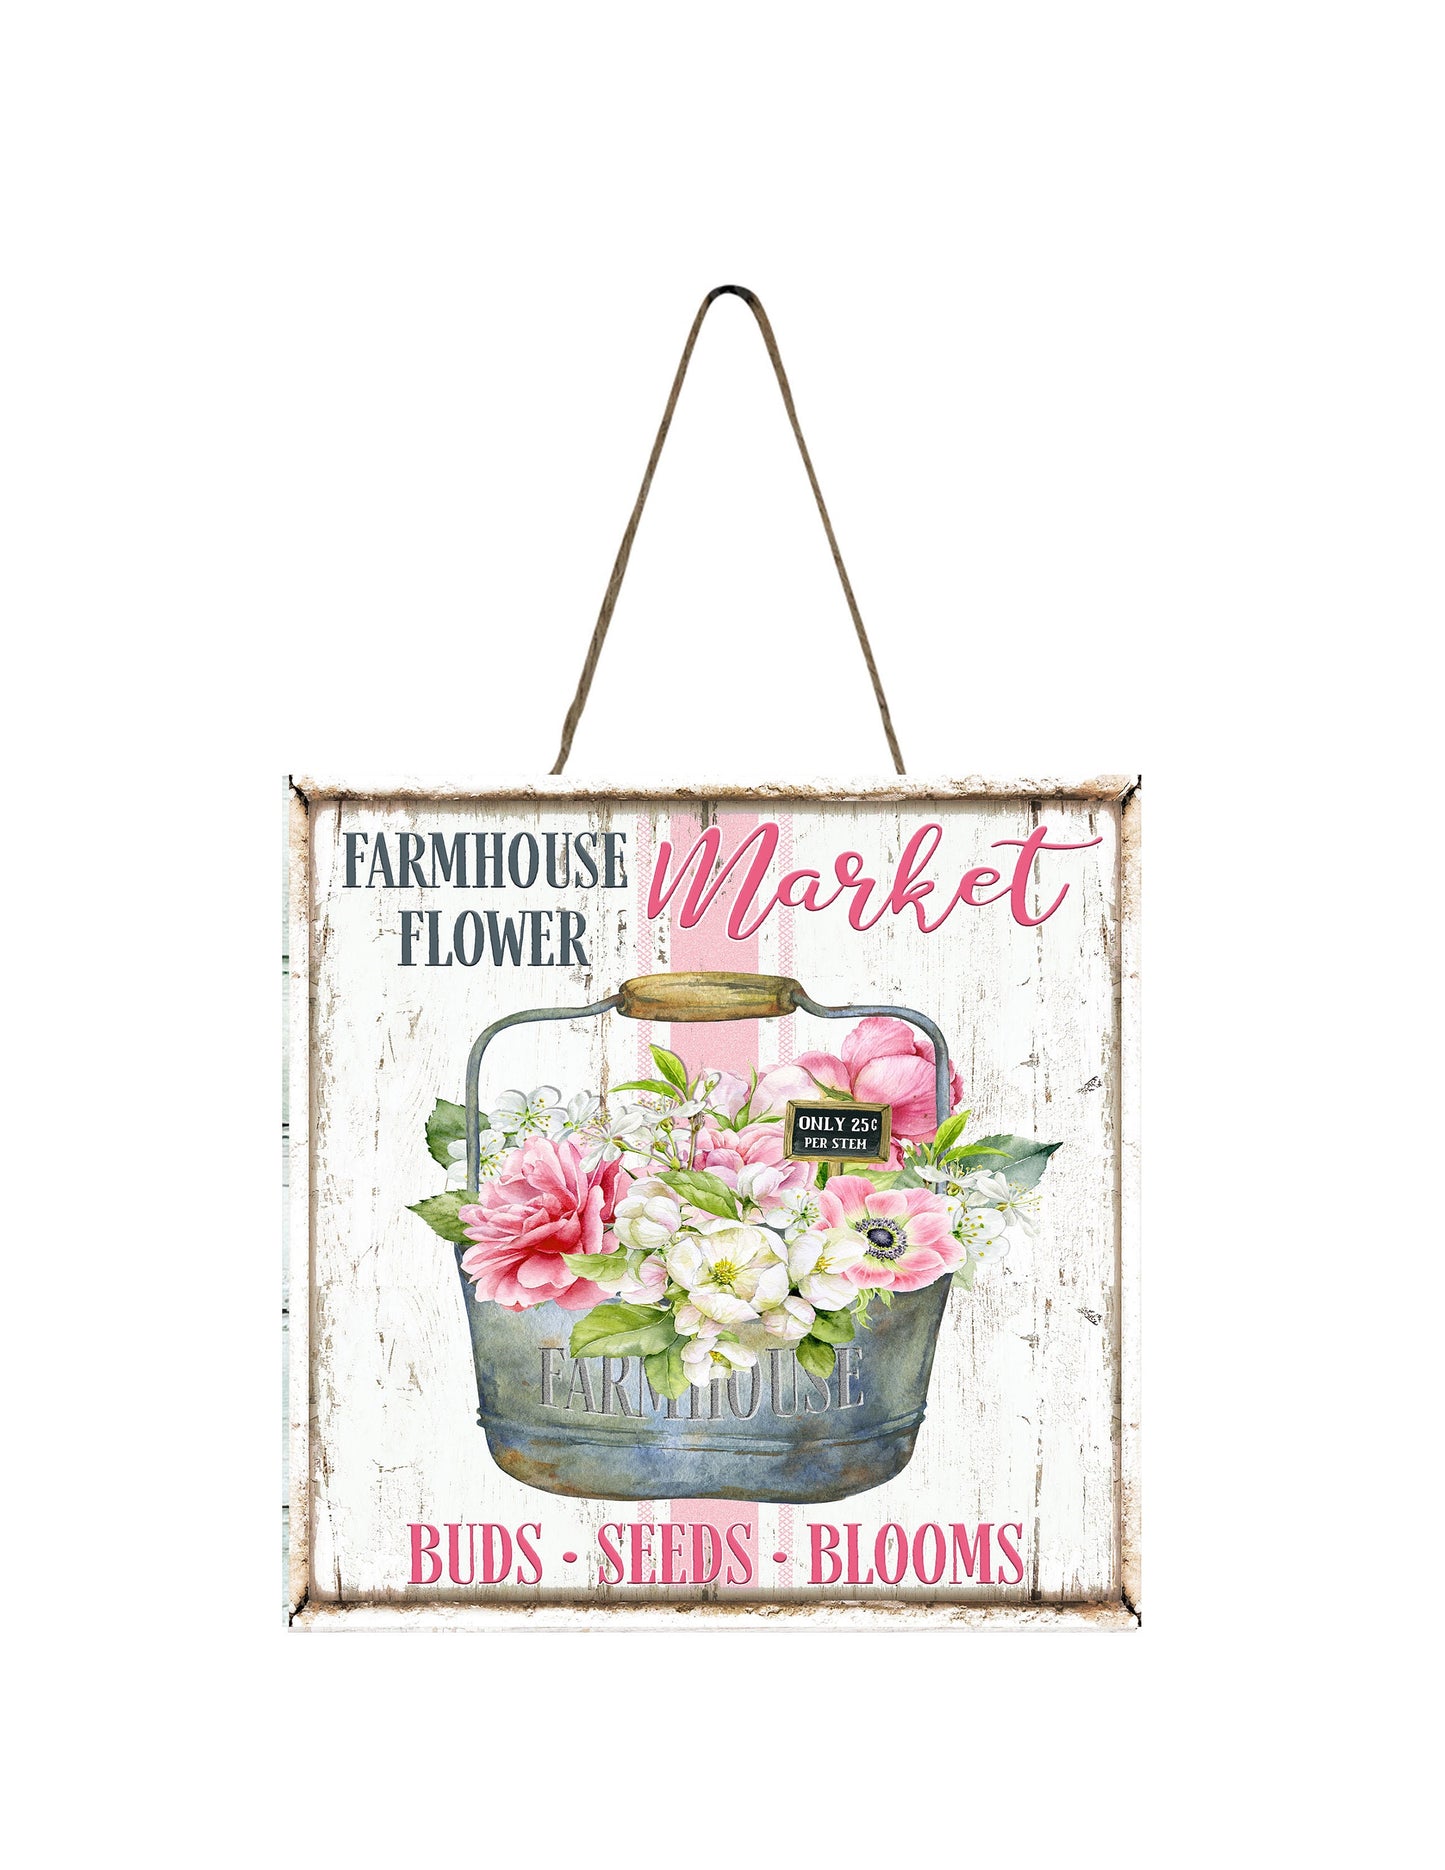 Farmhouse Flower Market Printed Handmade Wood  Mini Sign